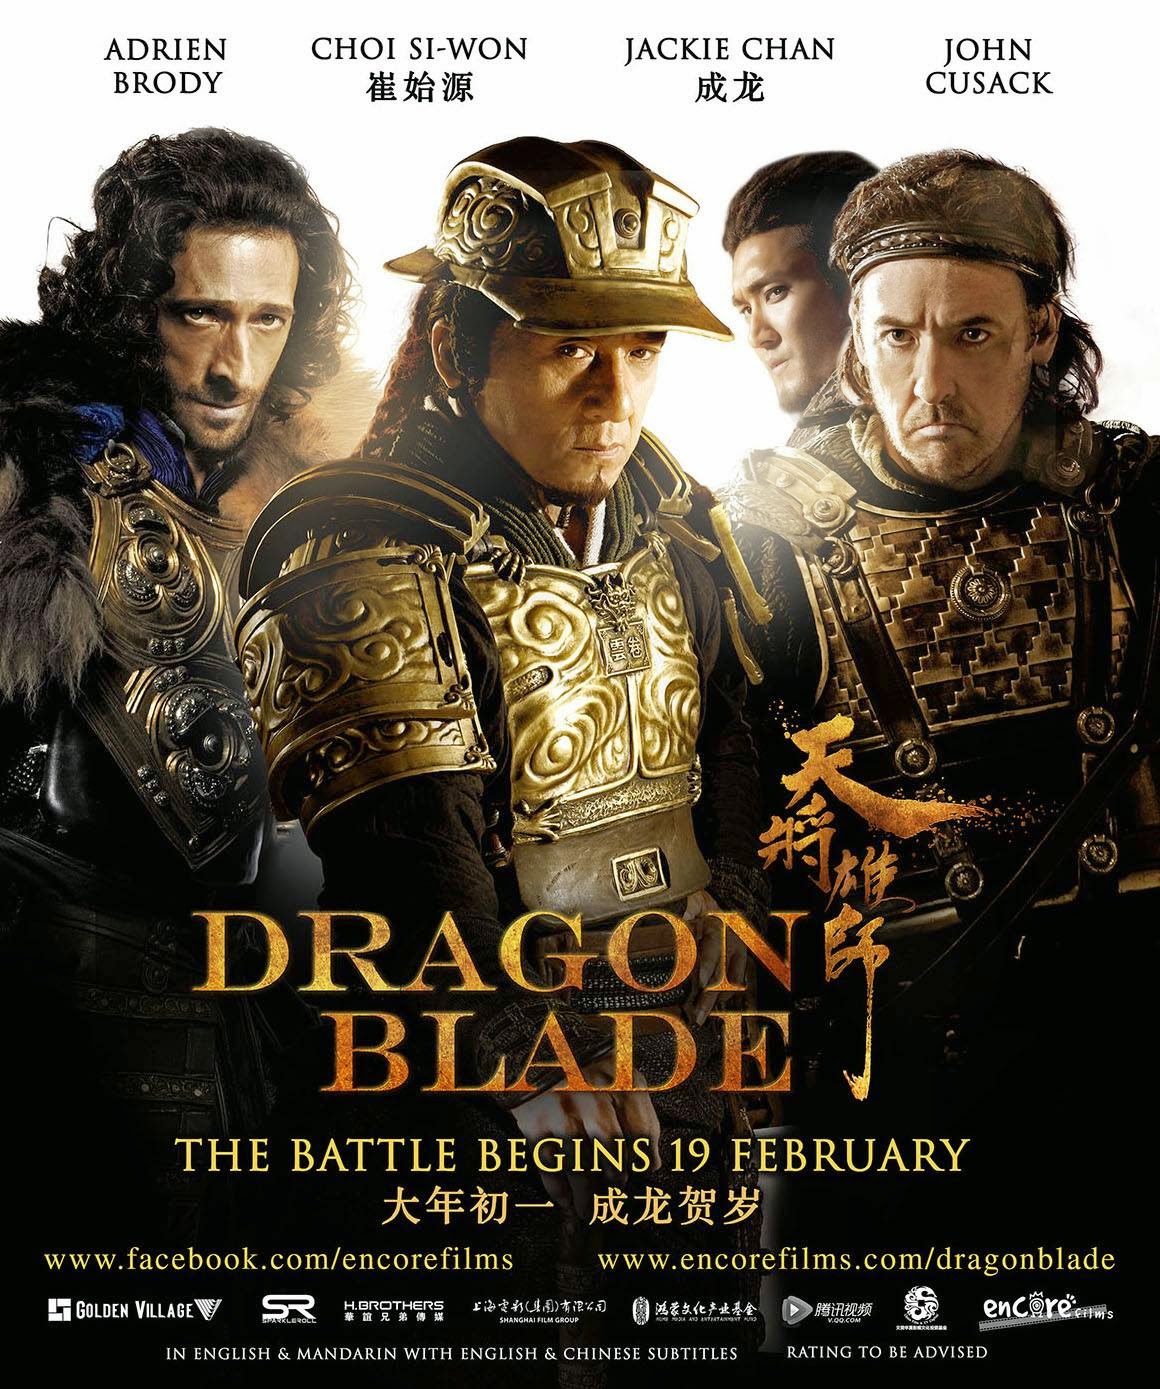 Nonton Film Online Dragon Blade (2015) - Nonton Film Online